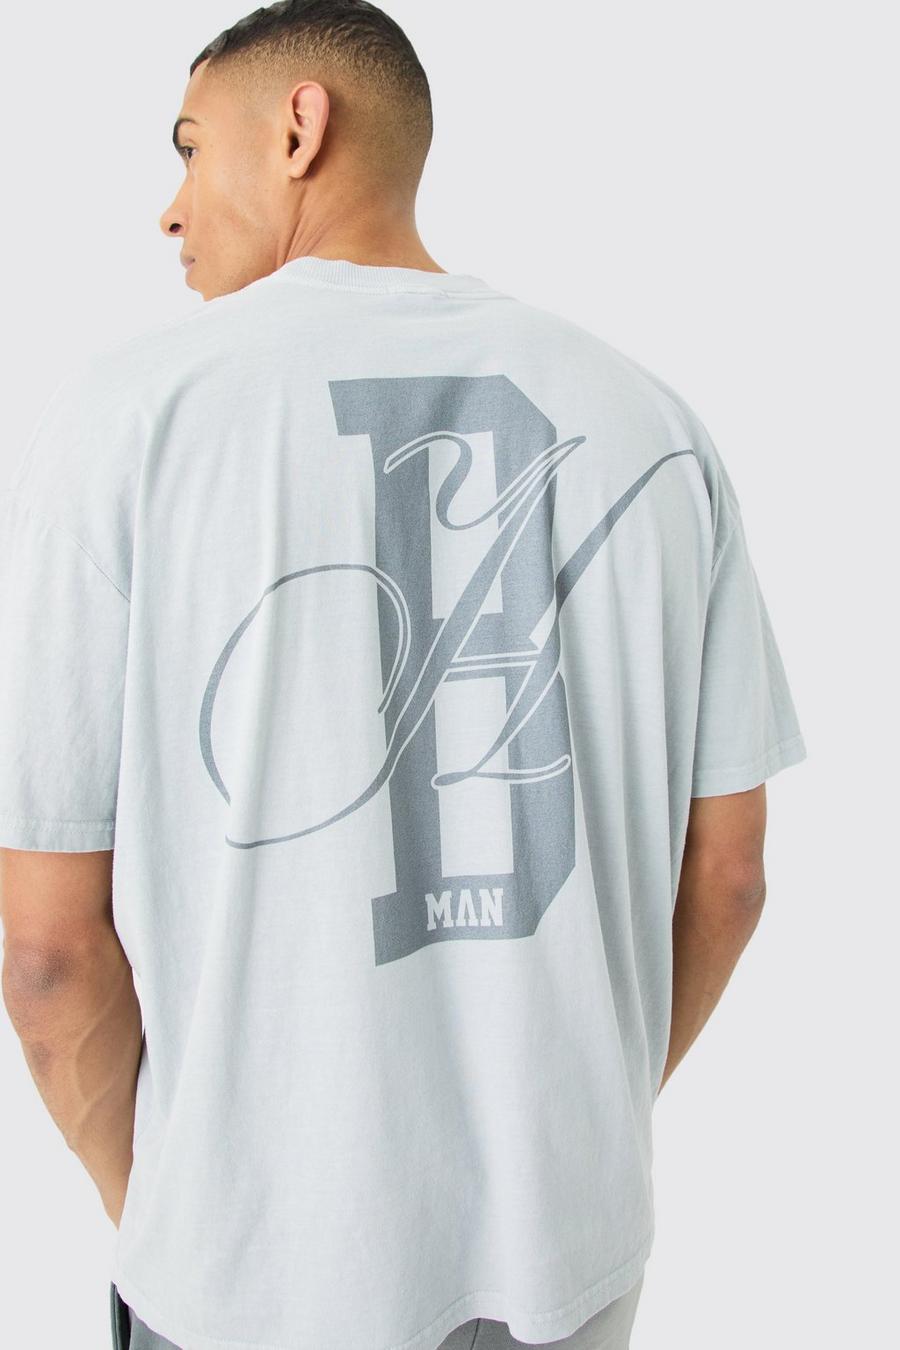 T-shirt oversize délavé - MAN, Light grey